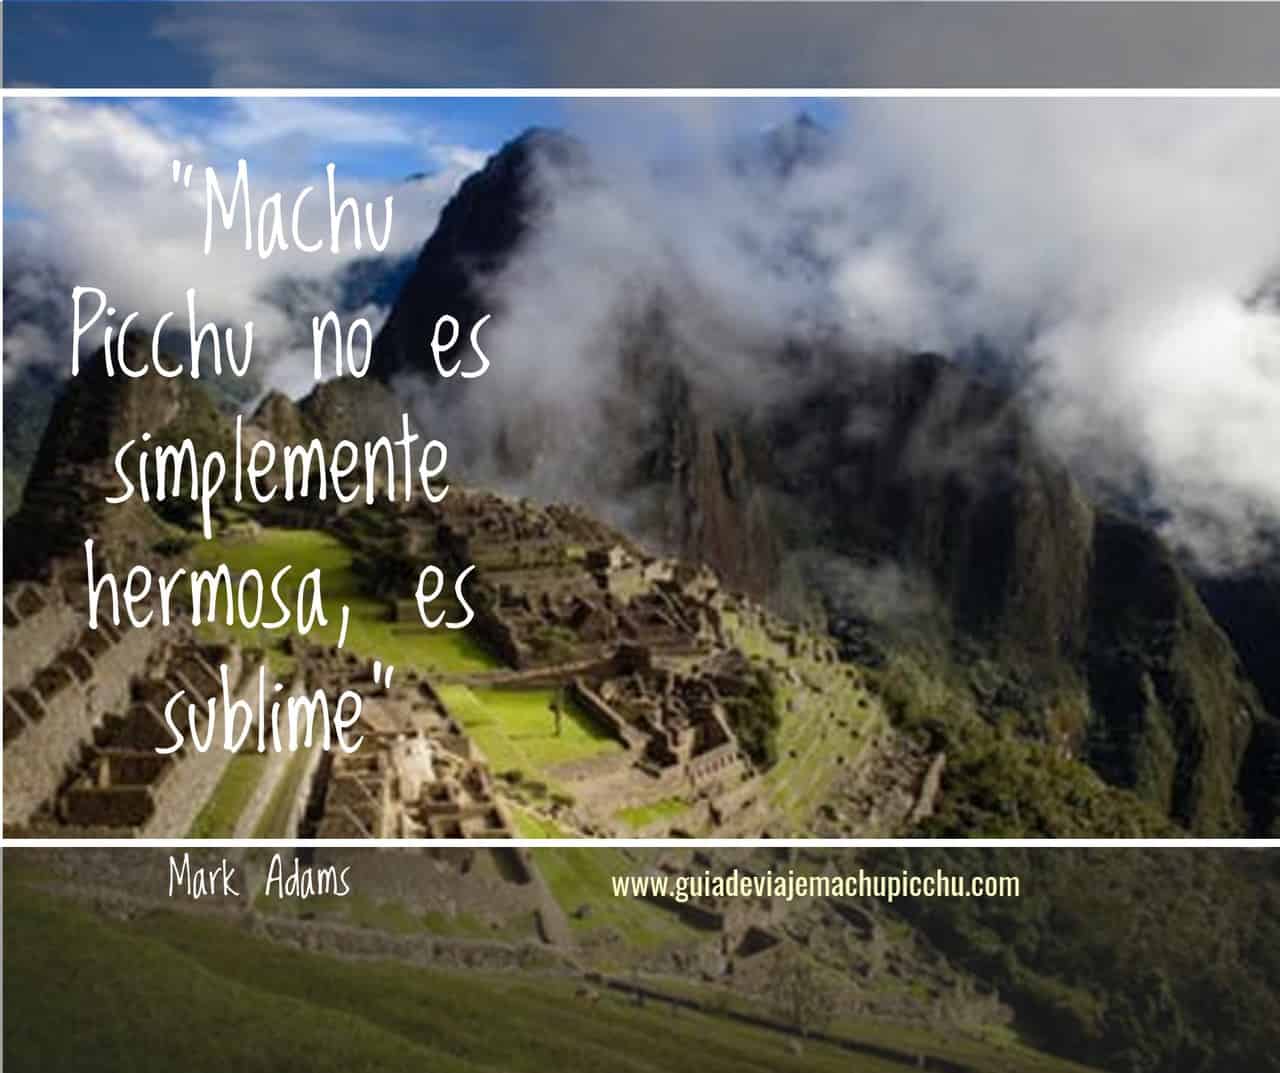 Machu Picchu quotes